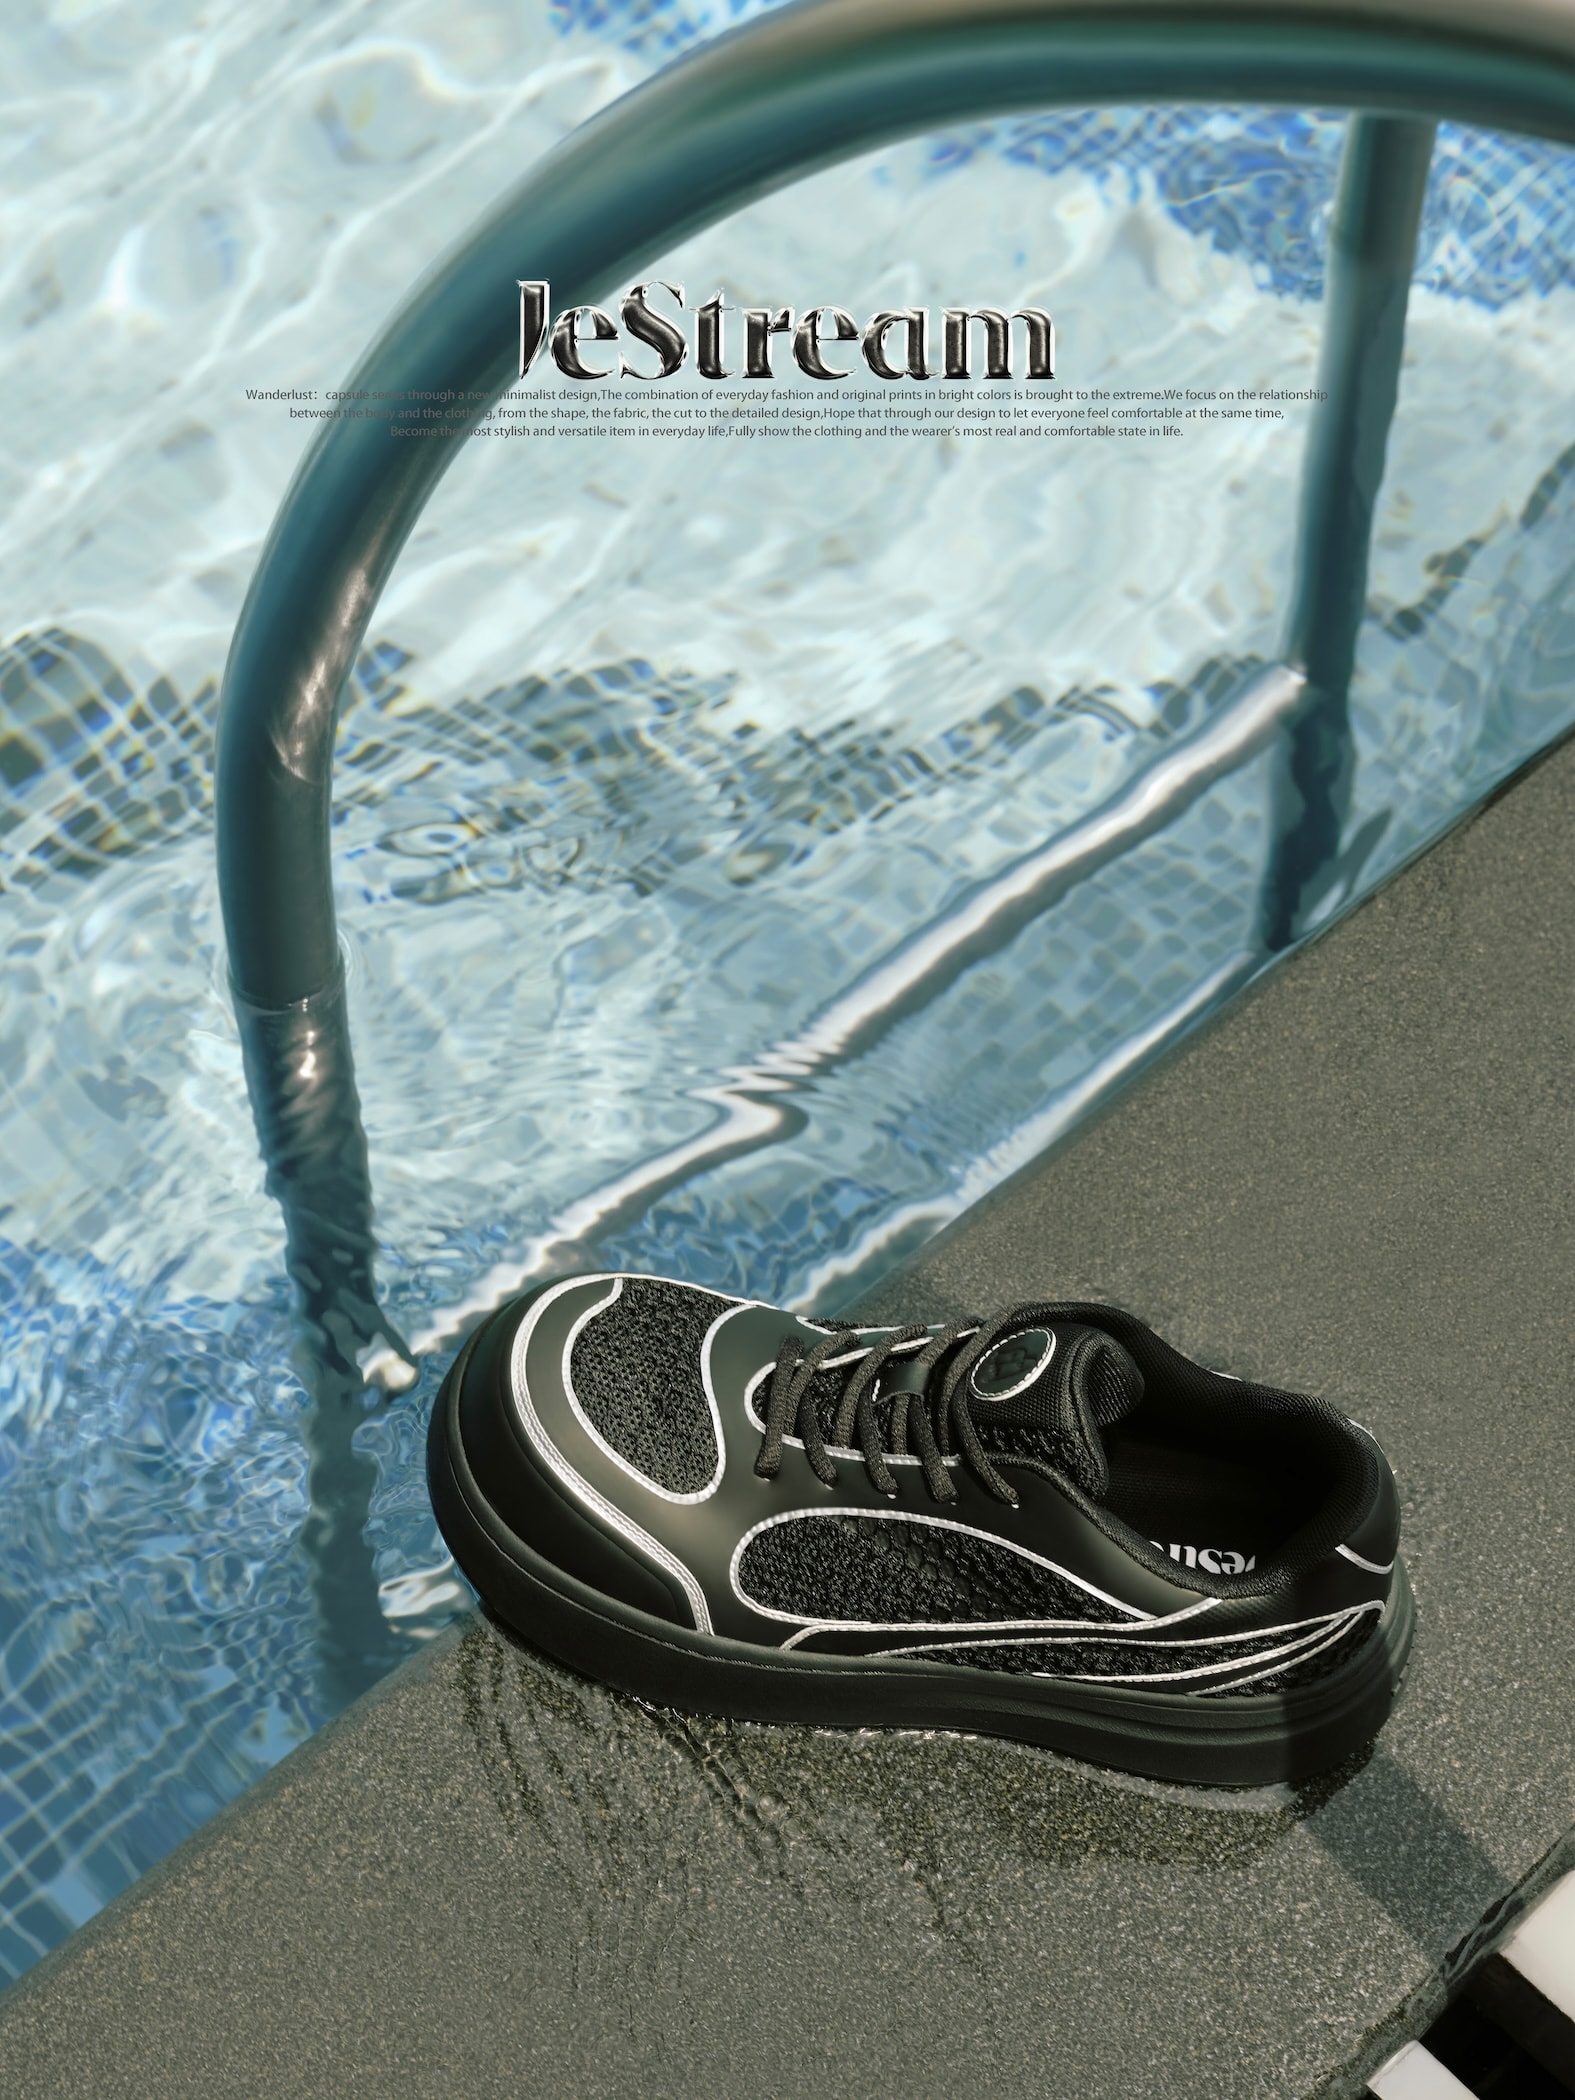 LeStream Wanderlust 释出全新四色复古跑鞋